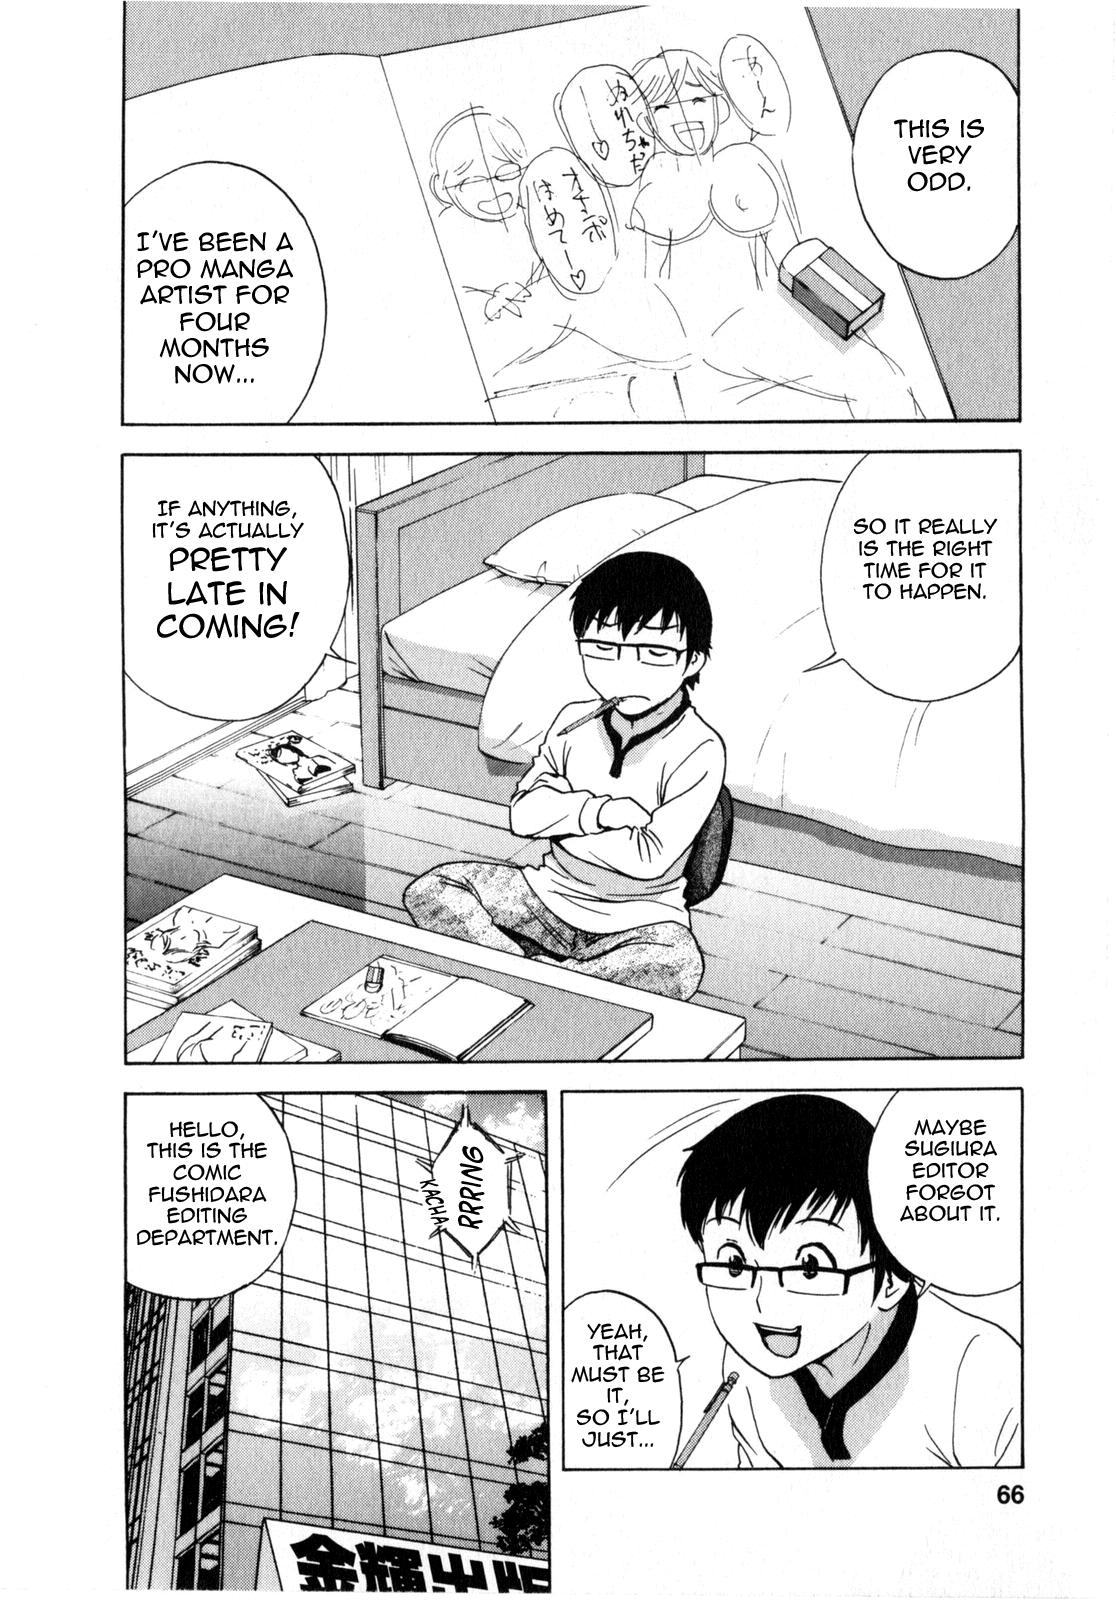 [Hidemaru] Life with Married Women Just Like a Manga 2 - Ch. 1-7 [English] {Tadanohito} 68